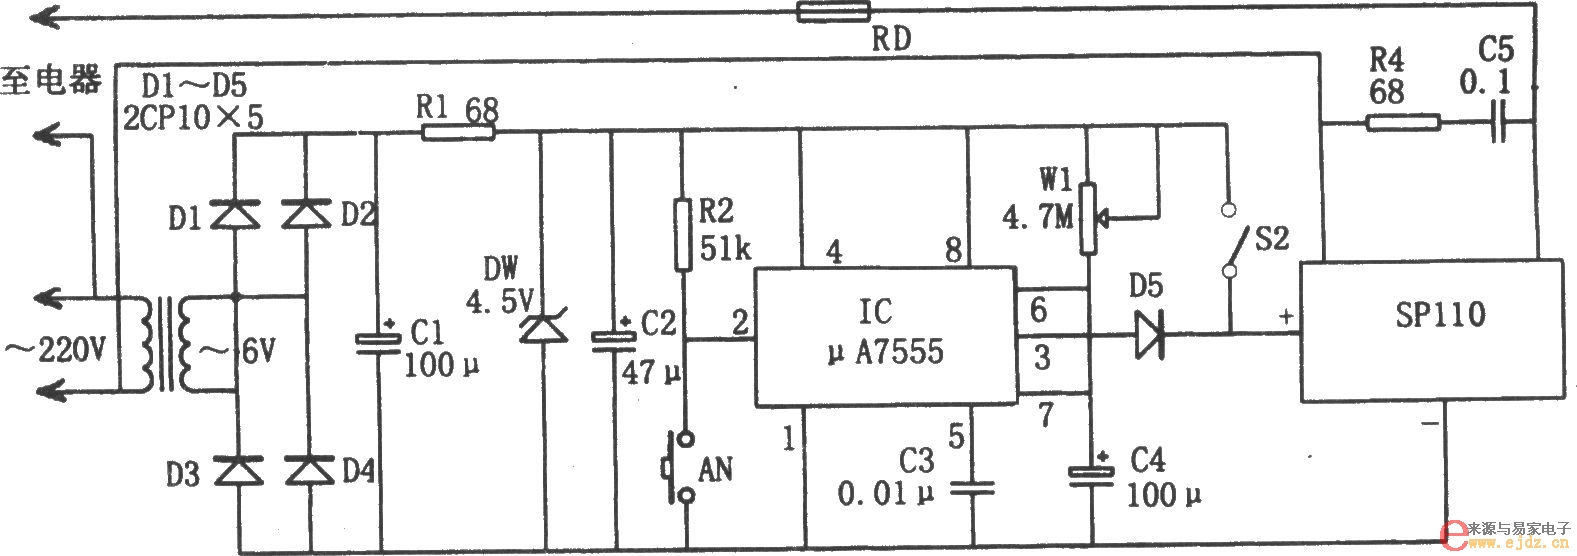 μA7555构成的交流电定时开关控制器电路图